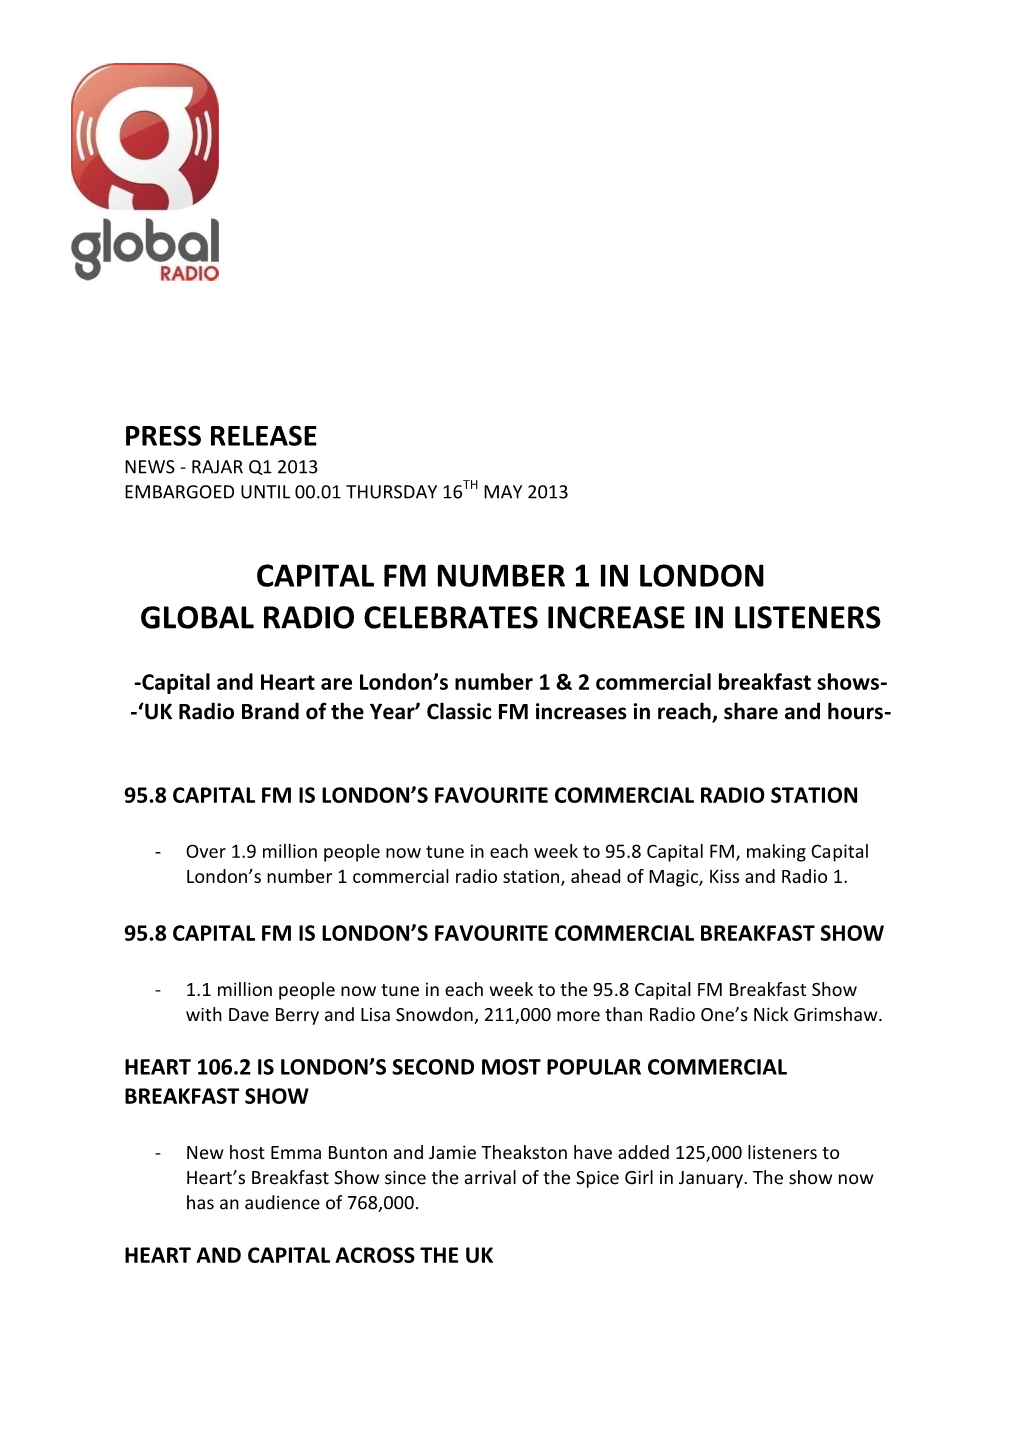 Capital Fm Number 1 in London Global Radio Celebrates Increase in Listeners